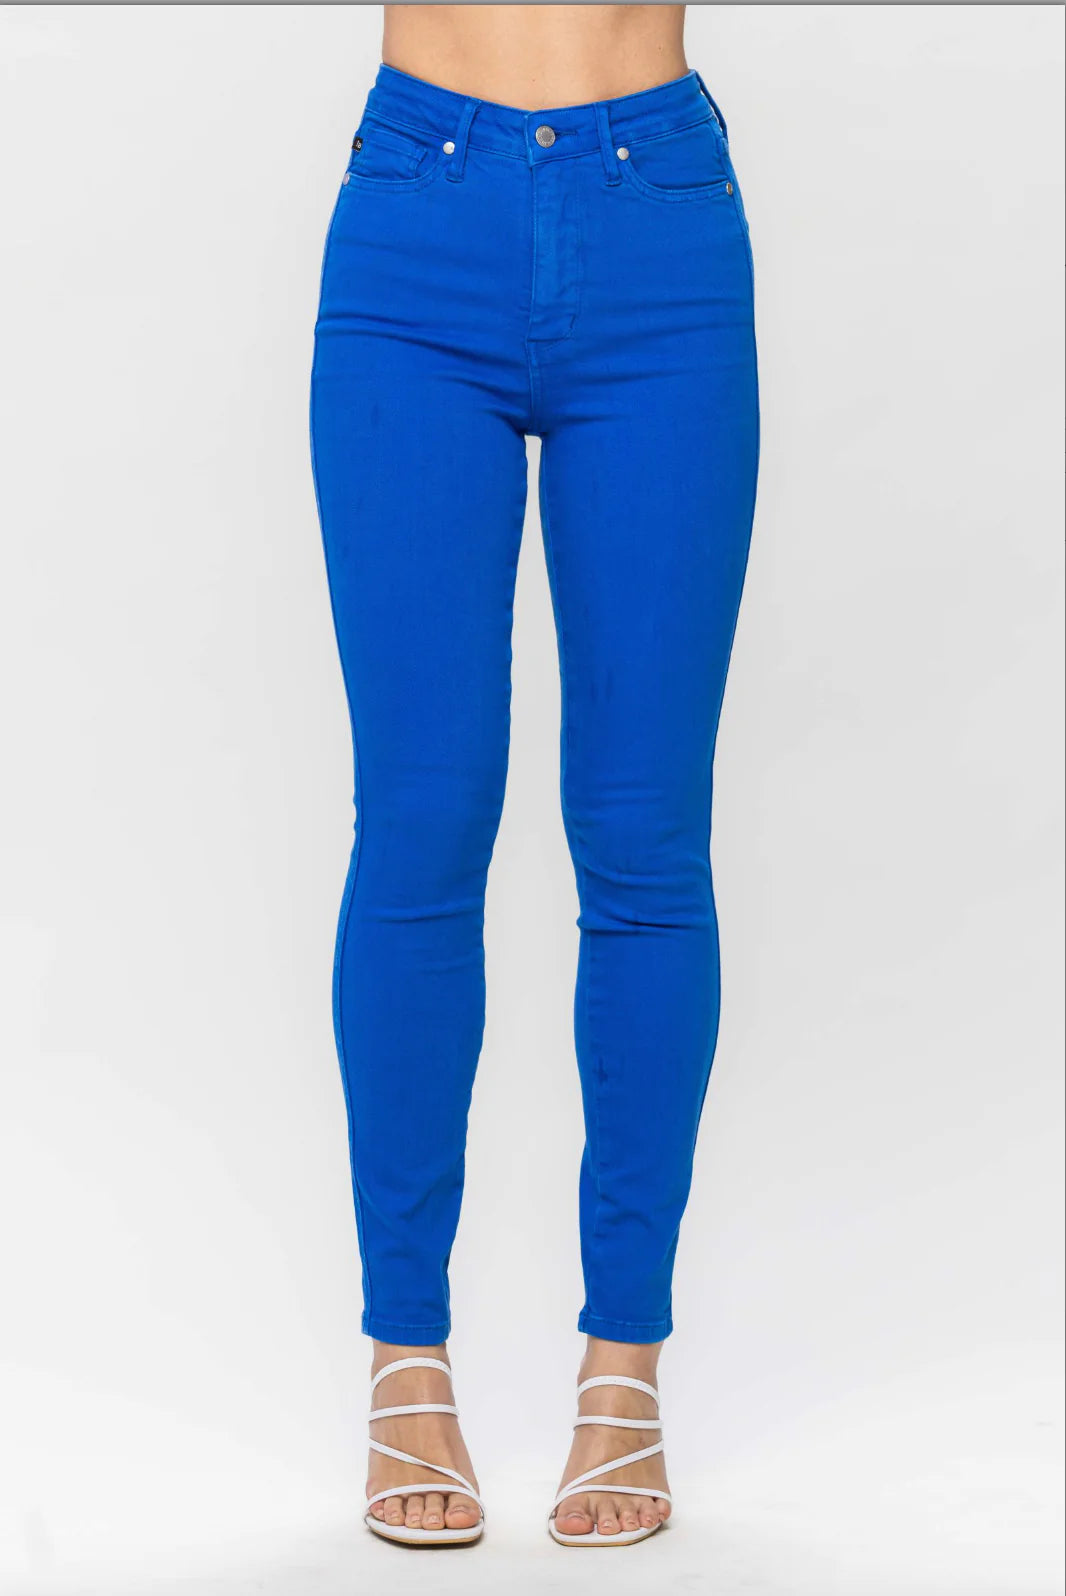 Tiffany High Waist Royal Blue Skinny Jeans - Judy Blue